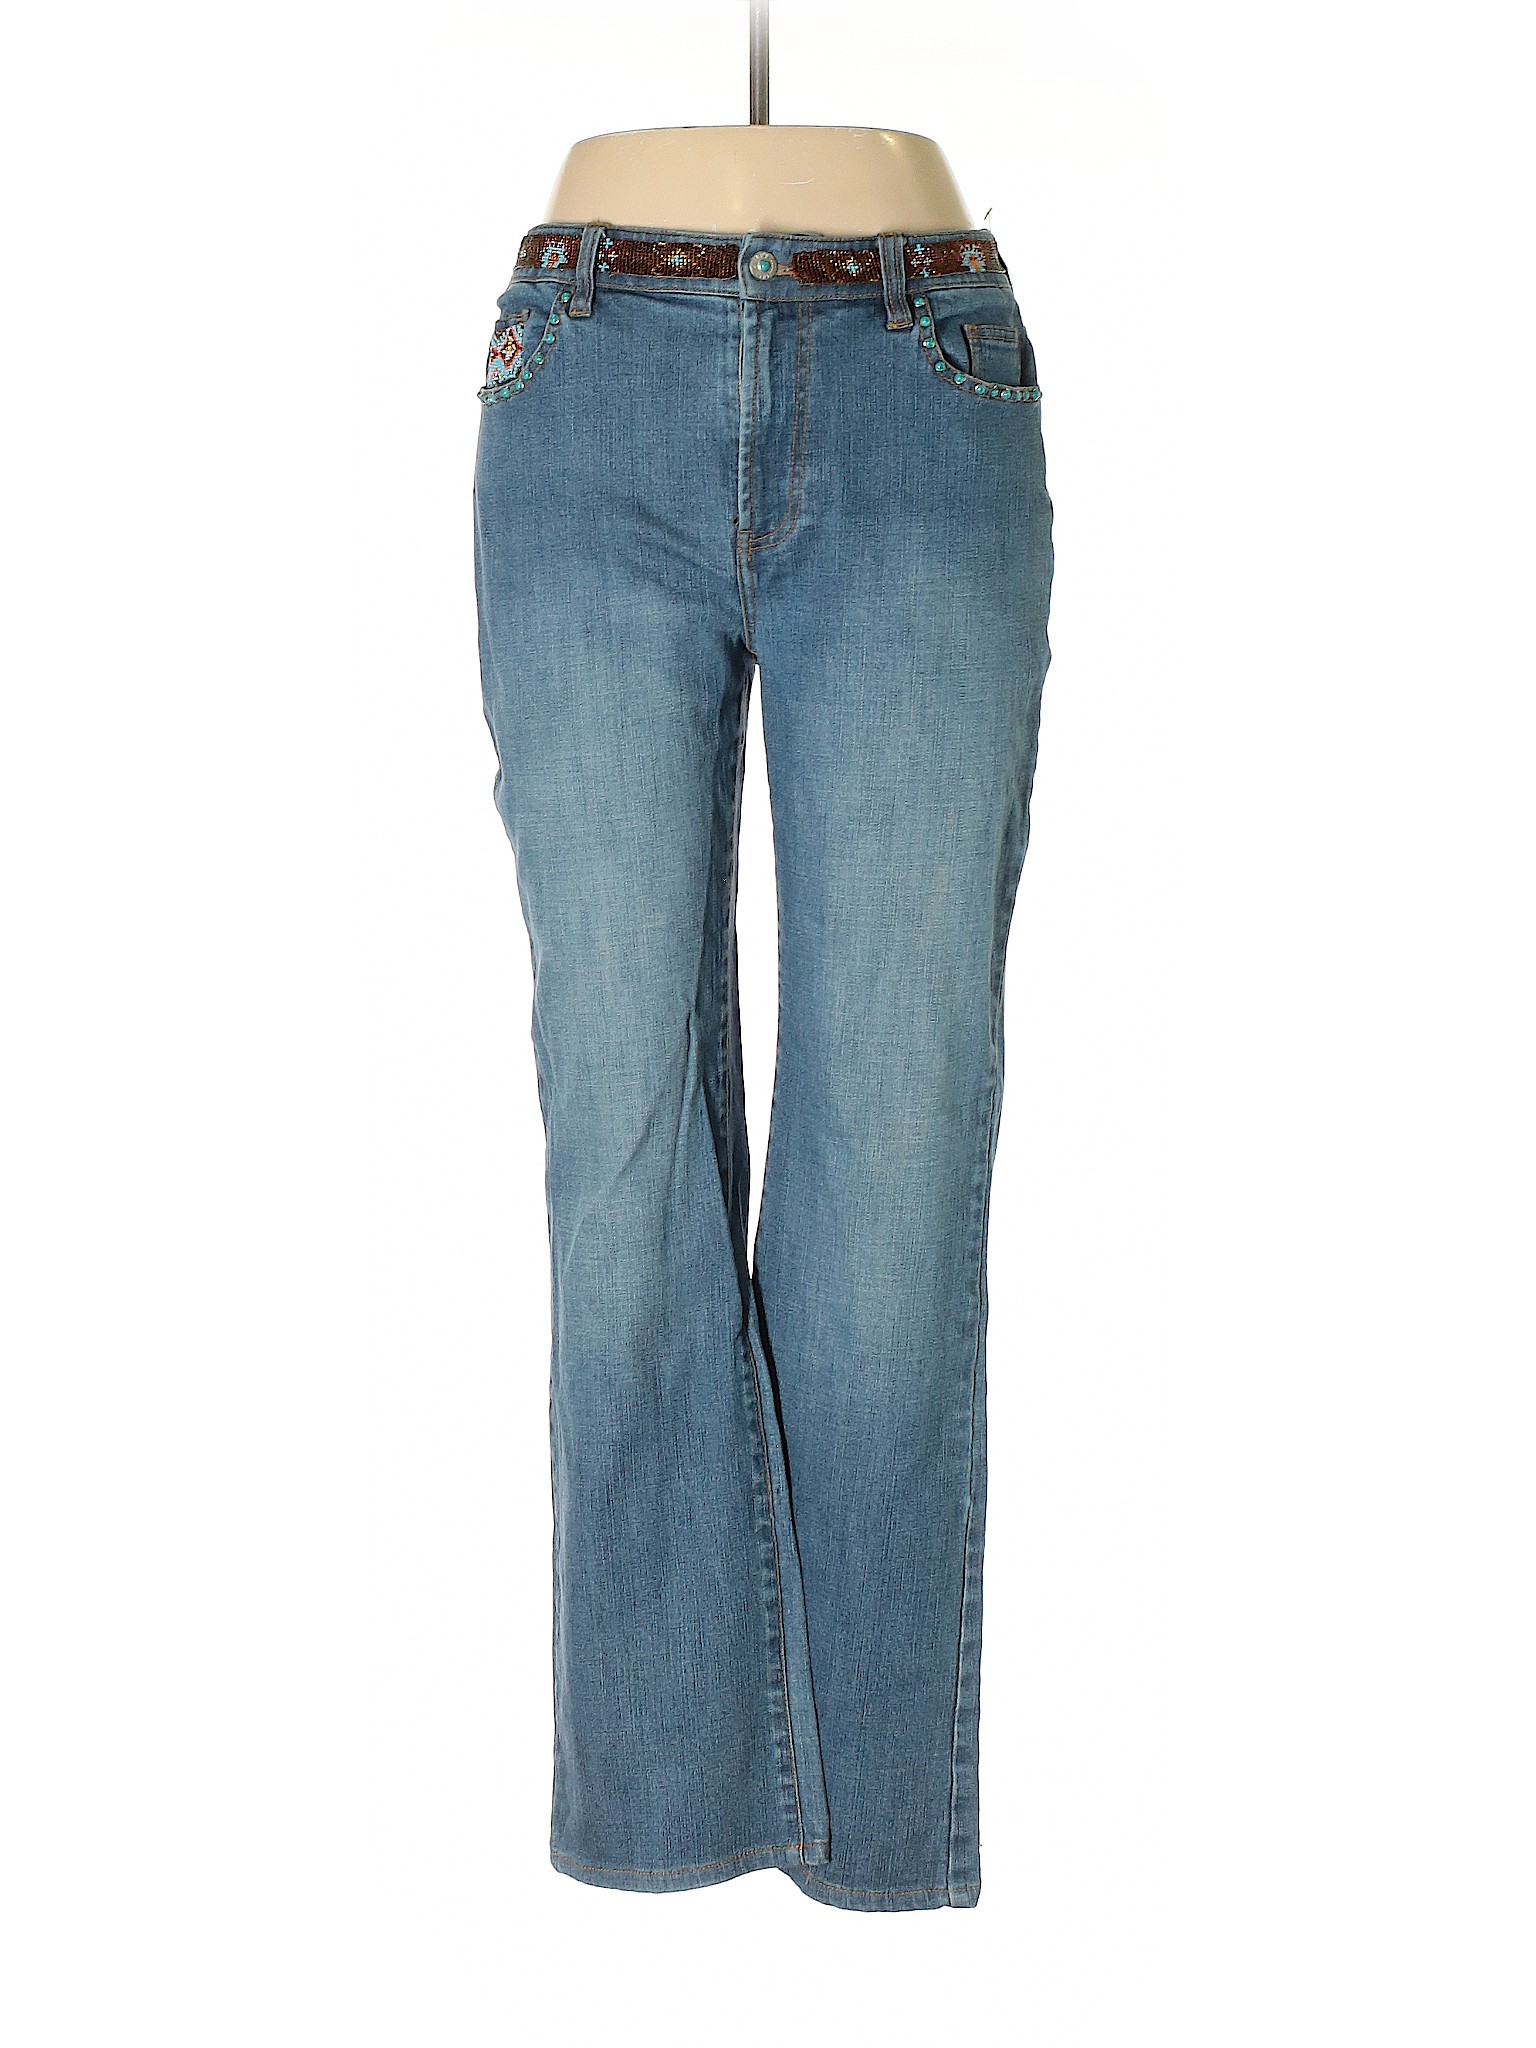 Chico's Women Blue Jeans M | eBay